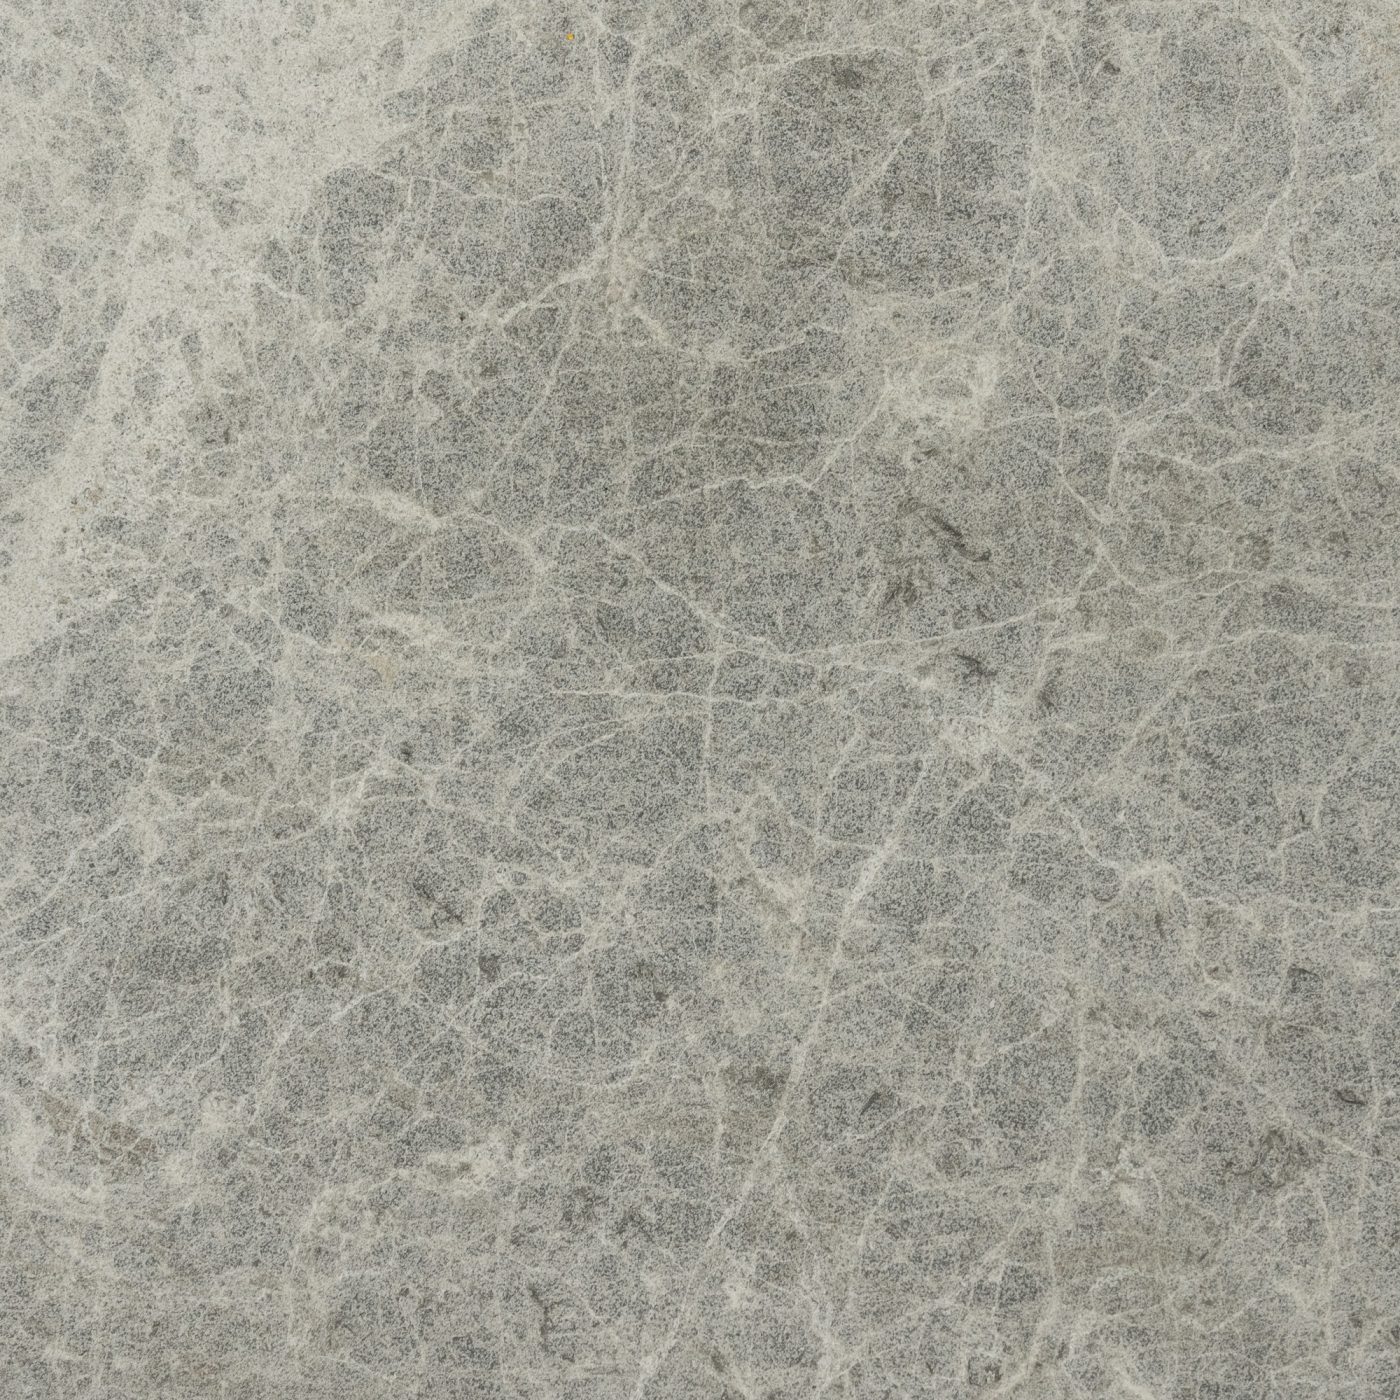 Tundra Grey Sandblasted Limestone